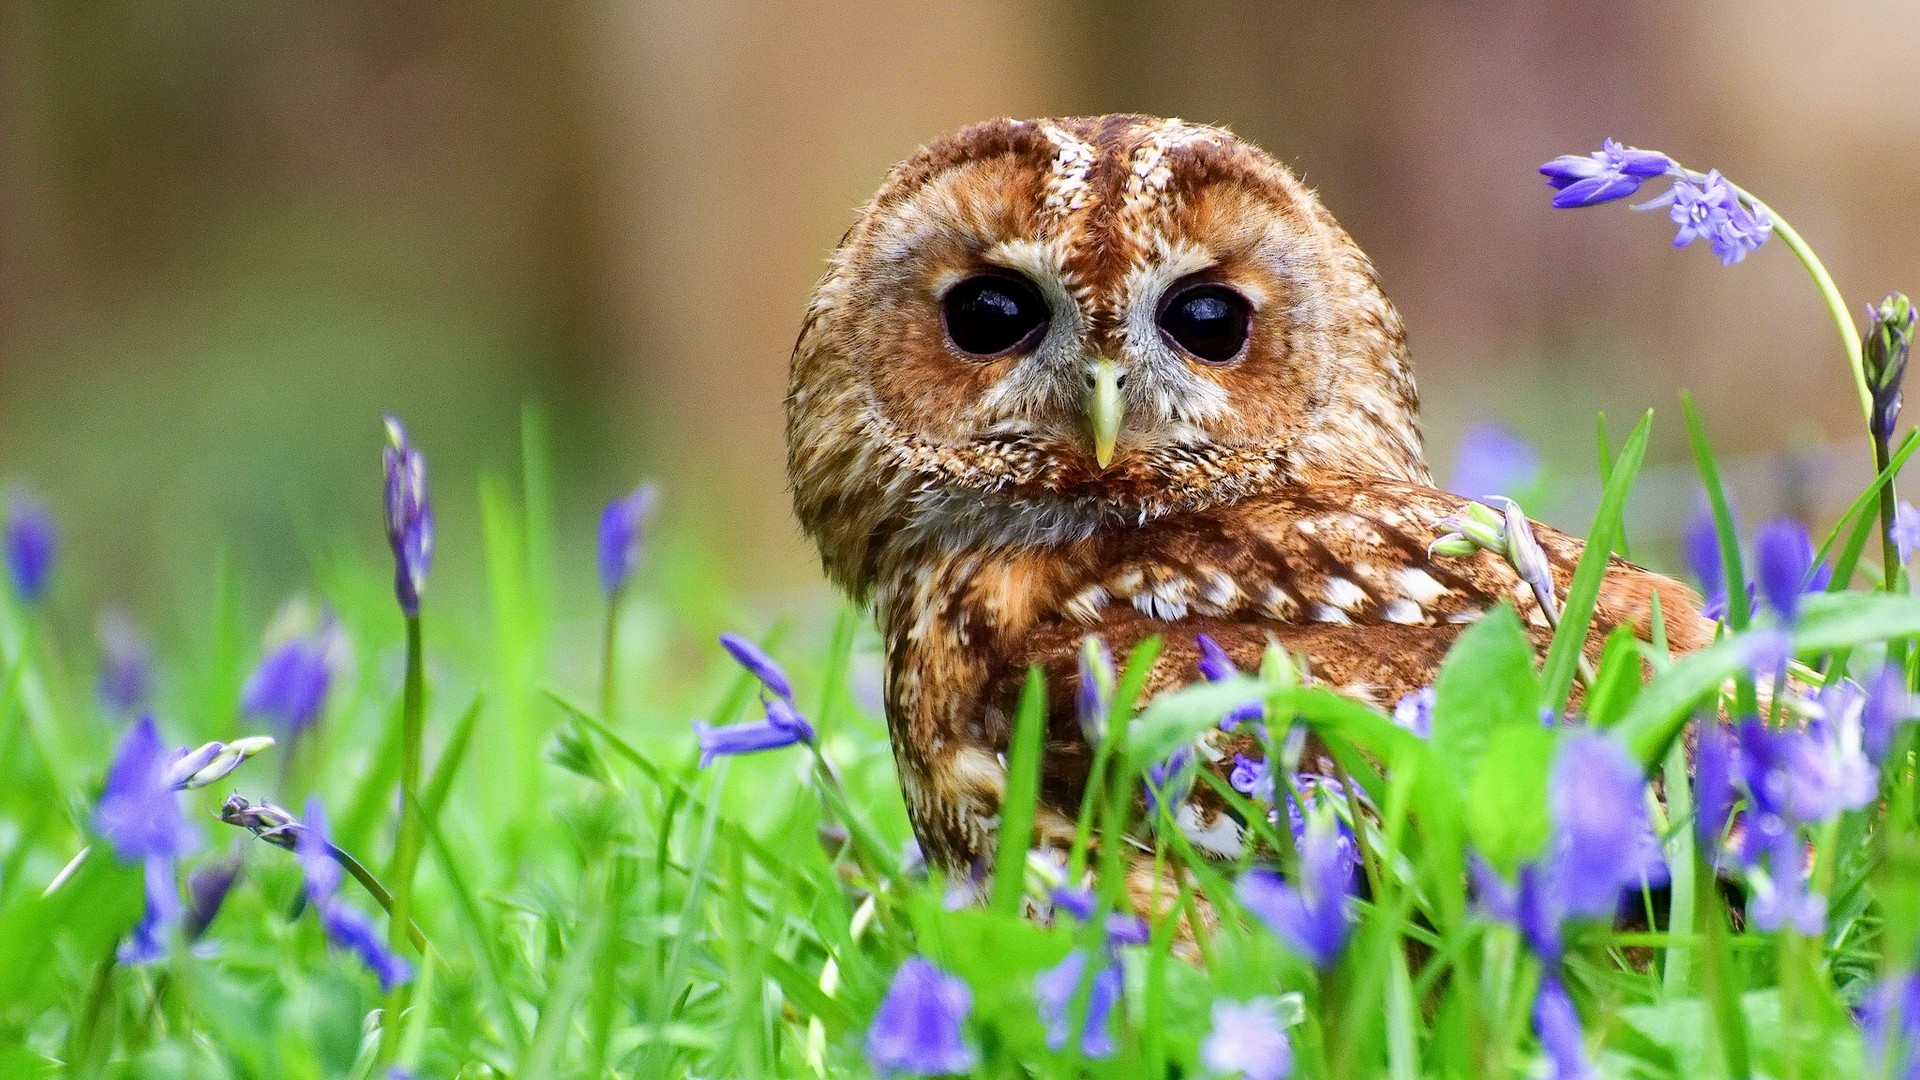 Cute Owl Backgrounds for Desktop | PixelsTalk.Net